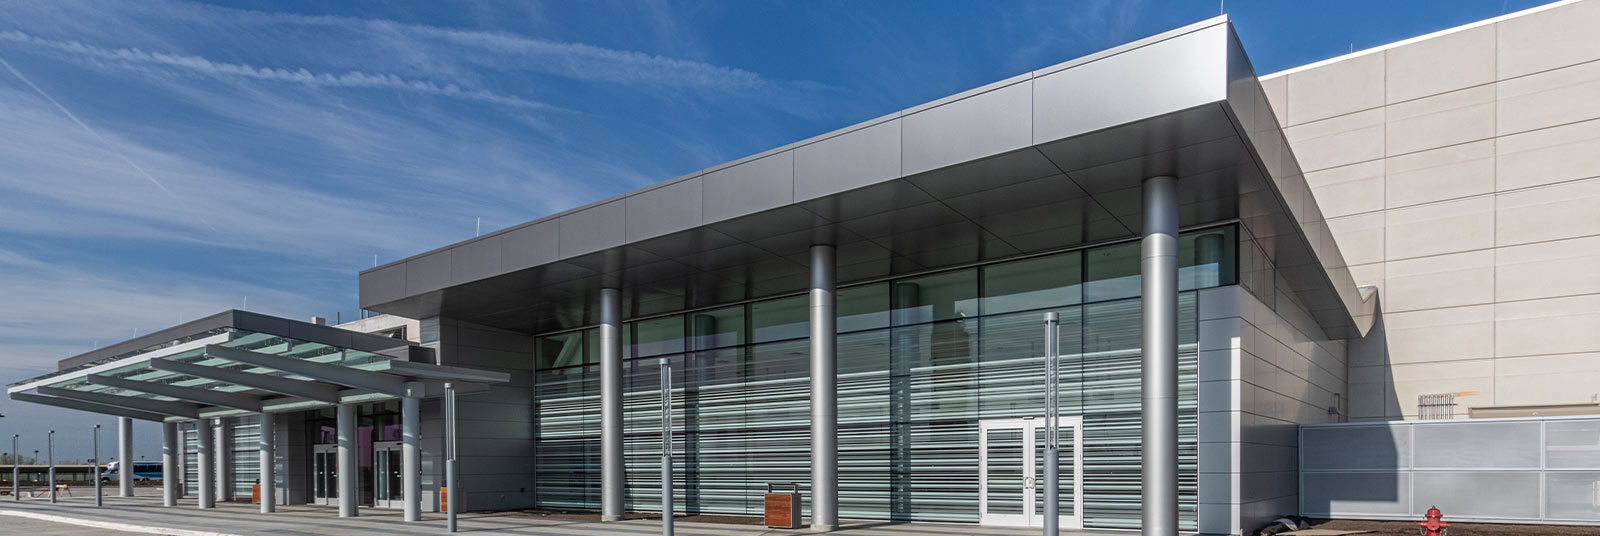 Entrance of the ConRAC at John Glenn Columbus International Airport.